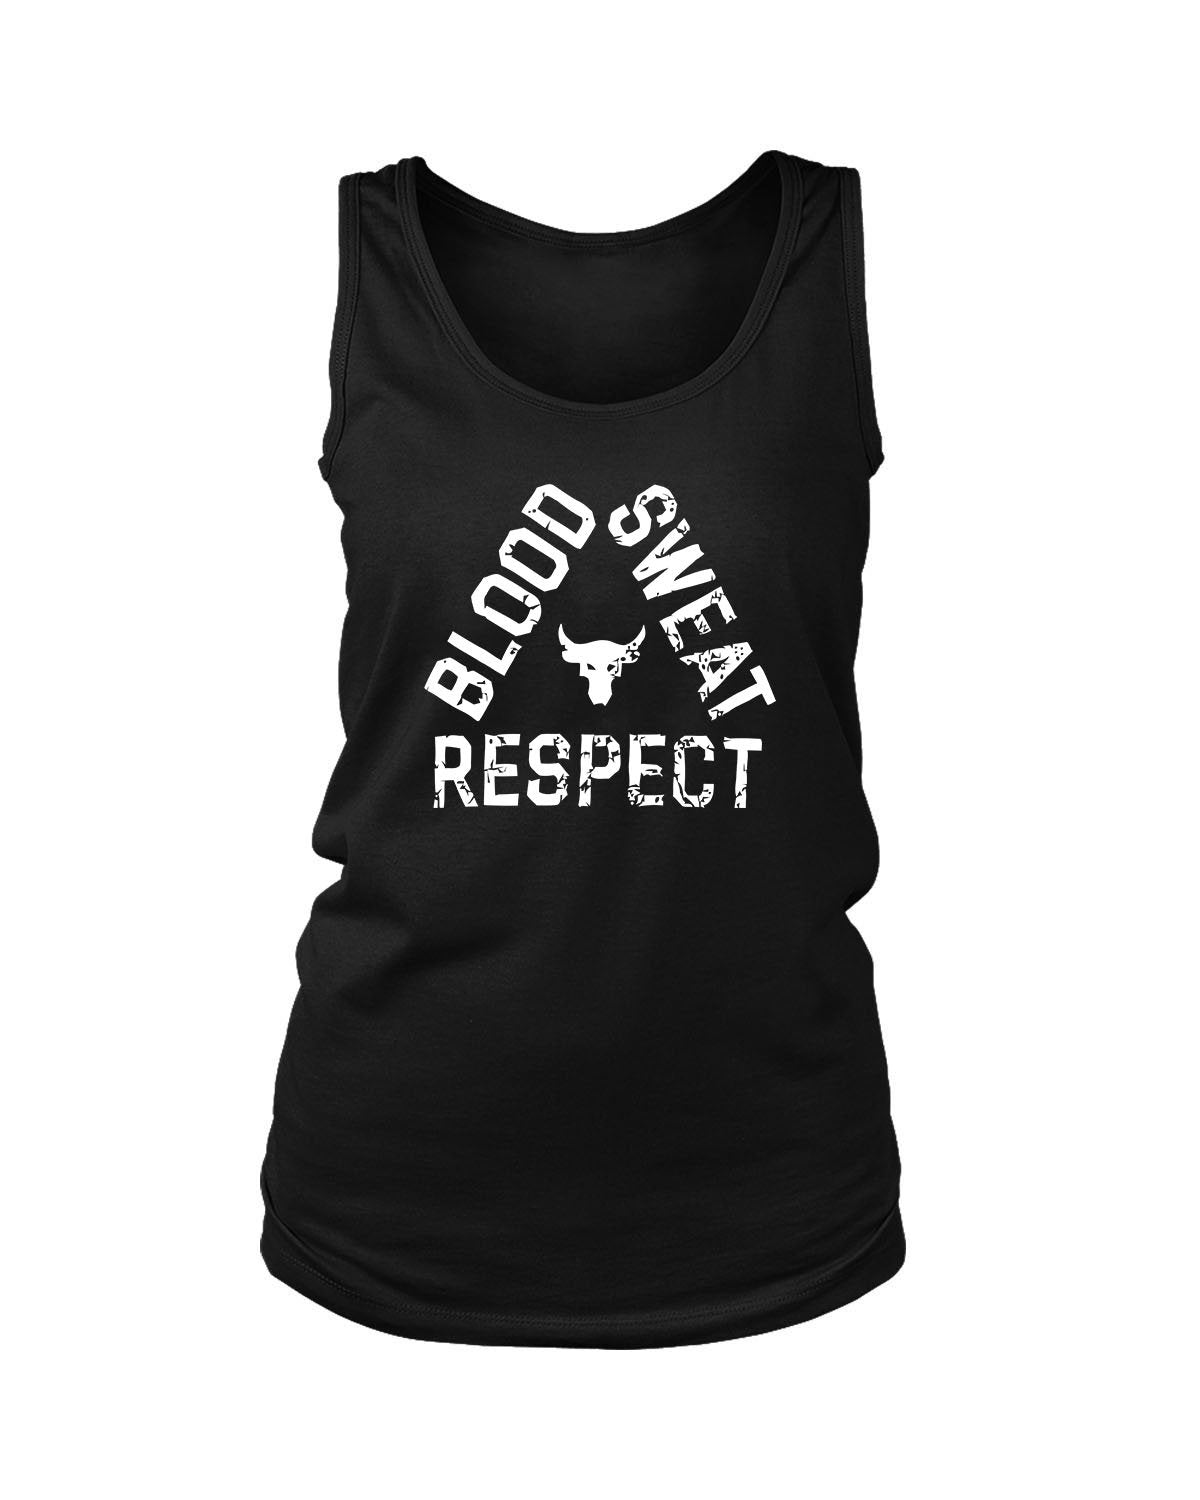 blood sweat respect tank top